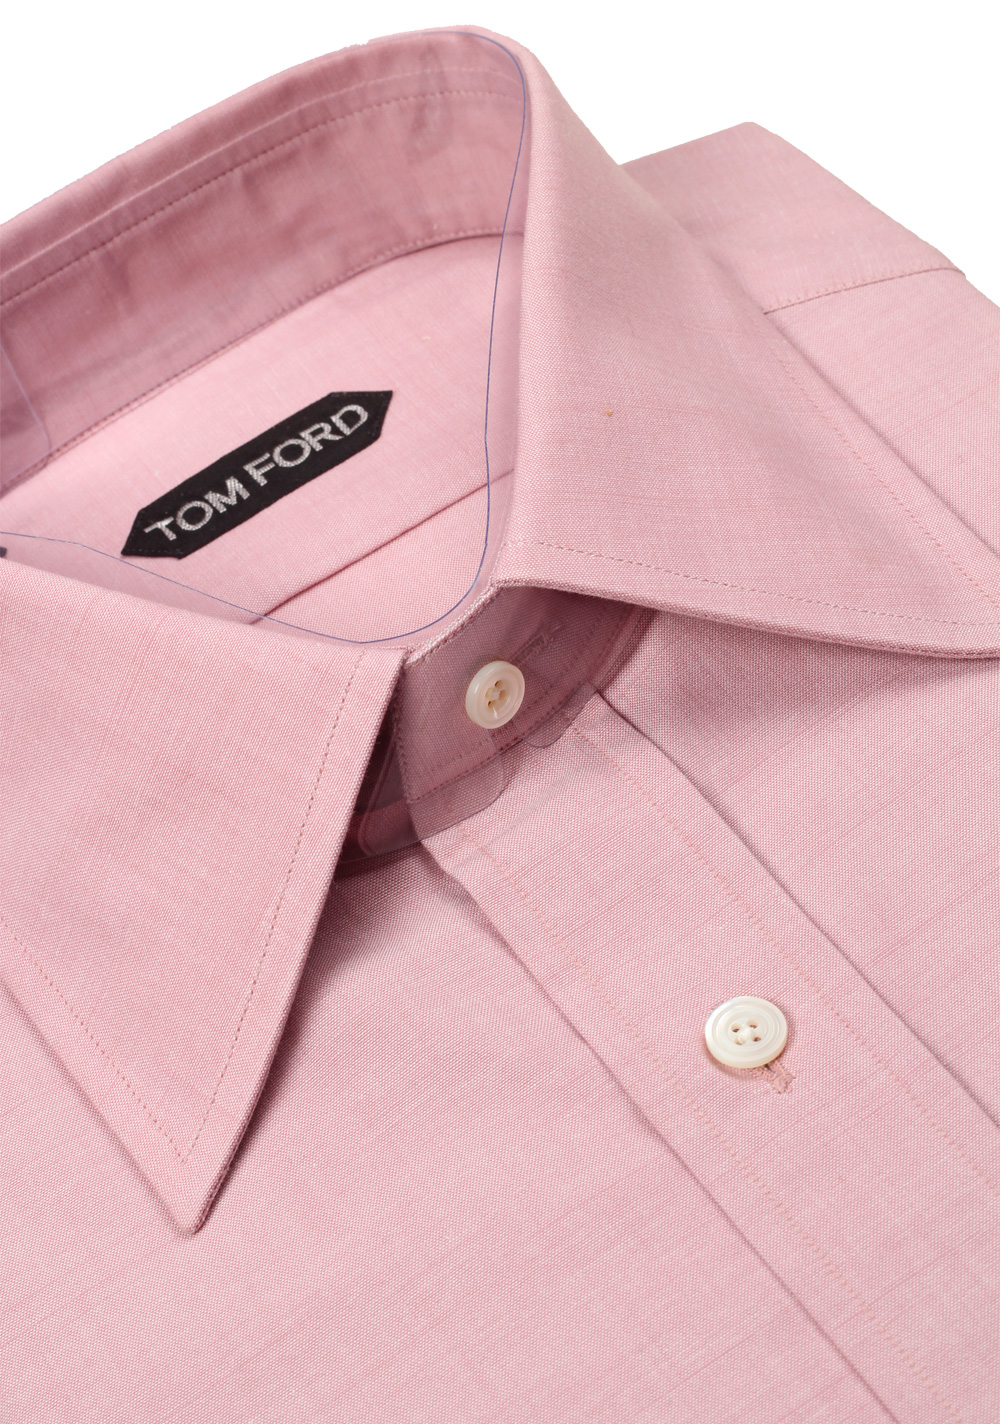 TOM FORD Solid Pink Dress Shirt Size 40 / 15,75 U.S. | Costume Limité